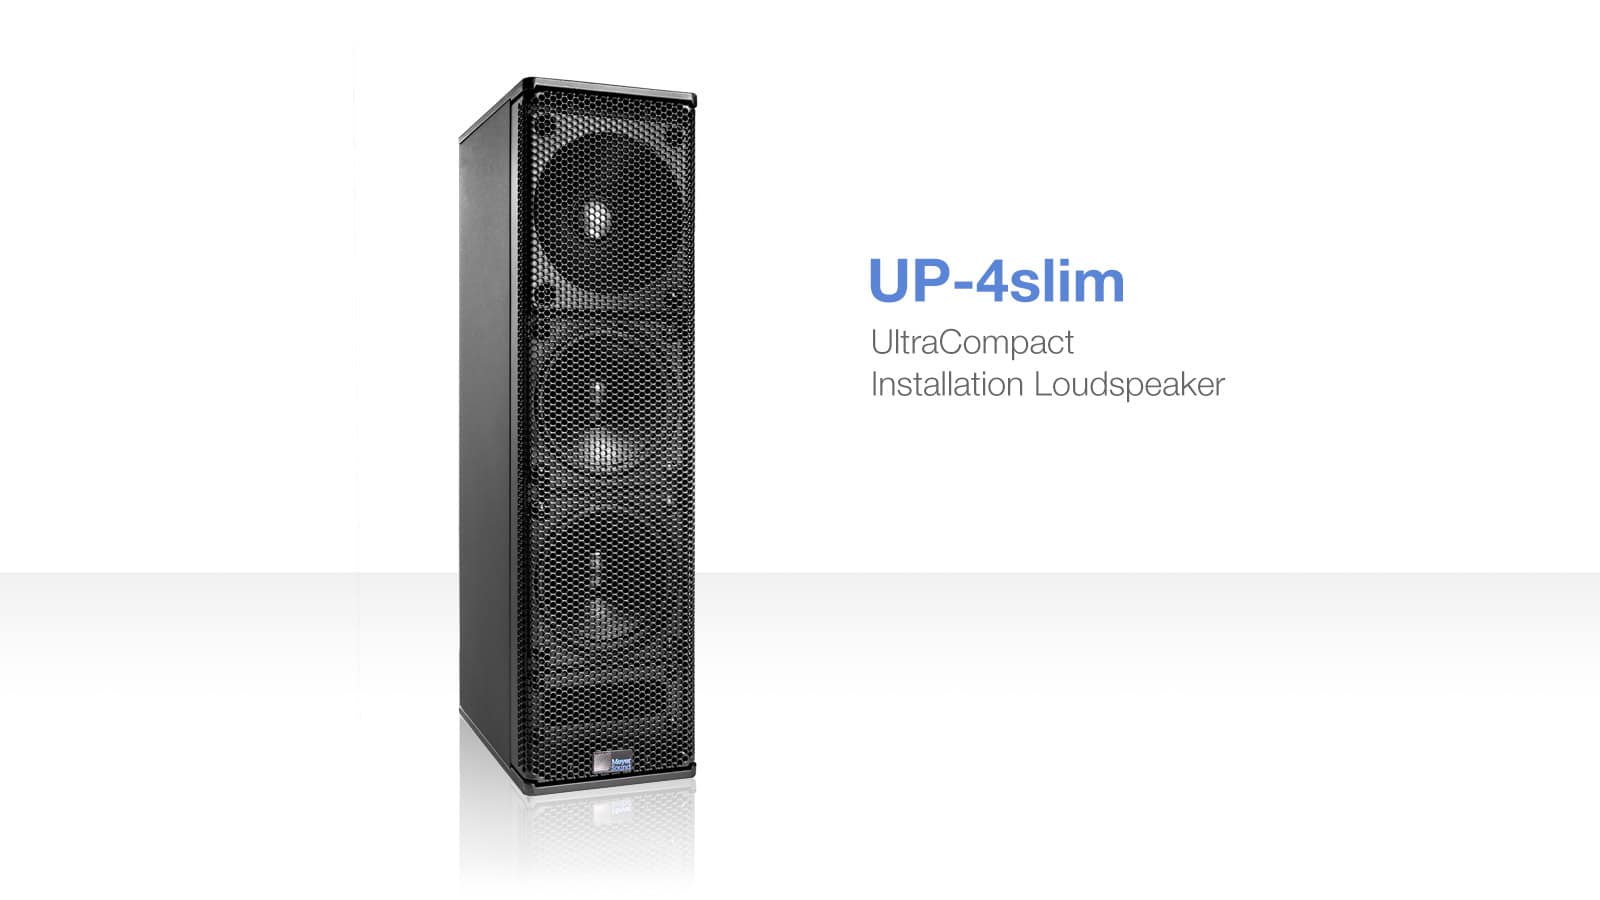 Meyer Sound Debuts UP-4slim UltraCompact Installation Loudspeaker